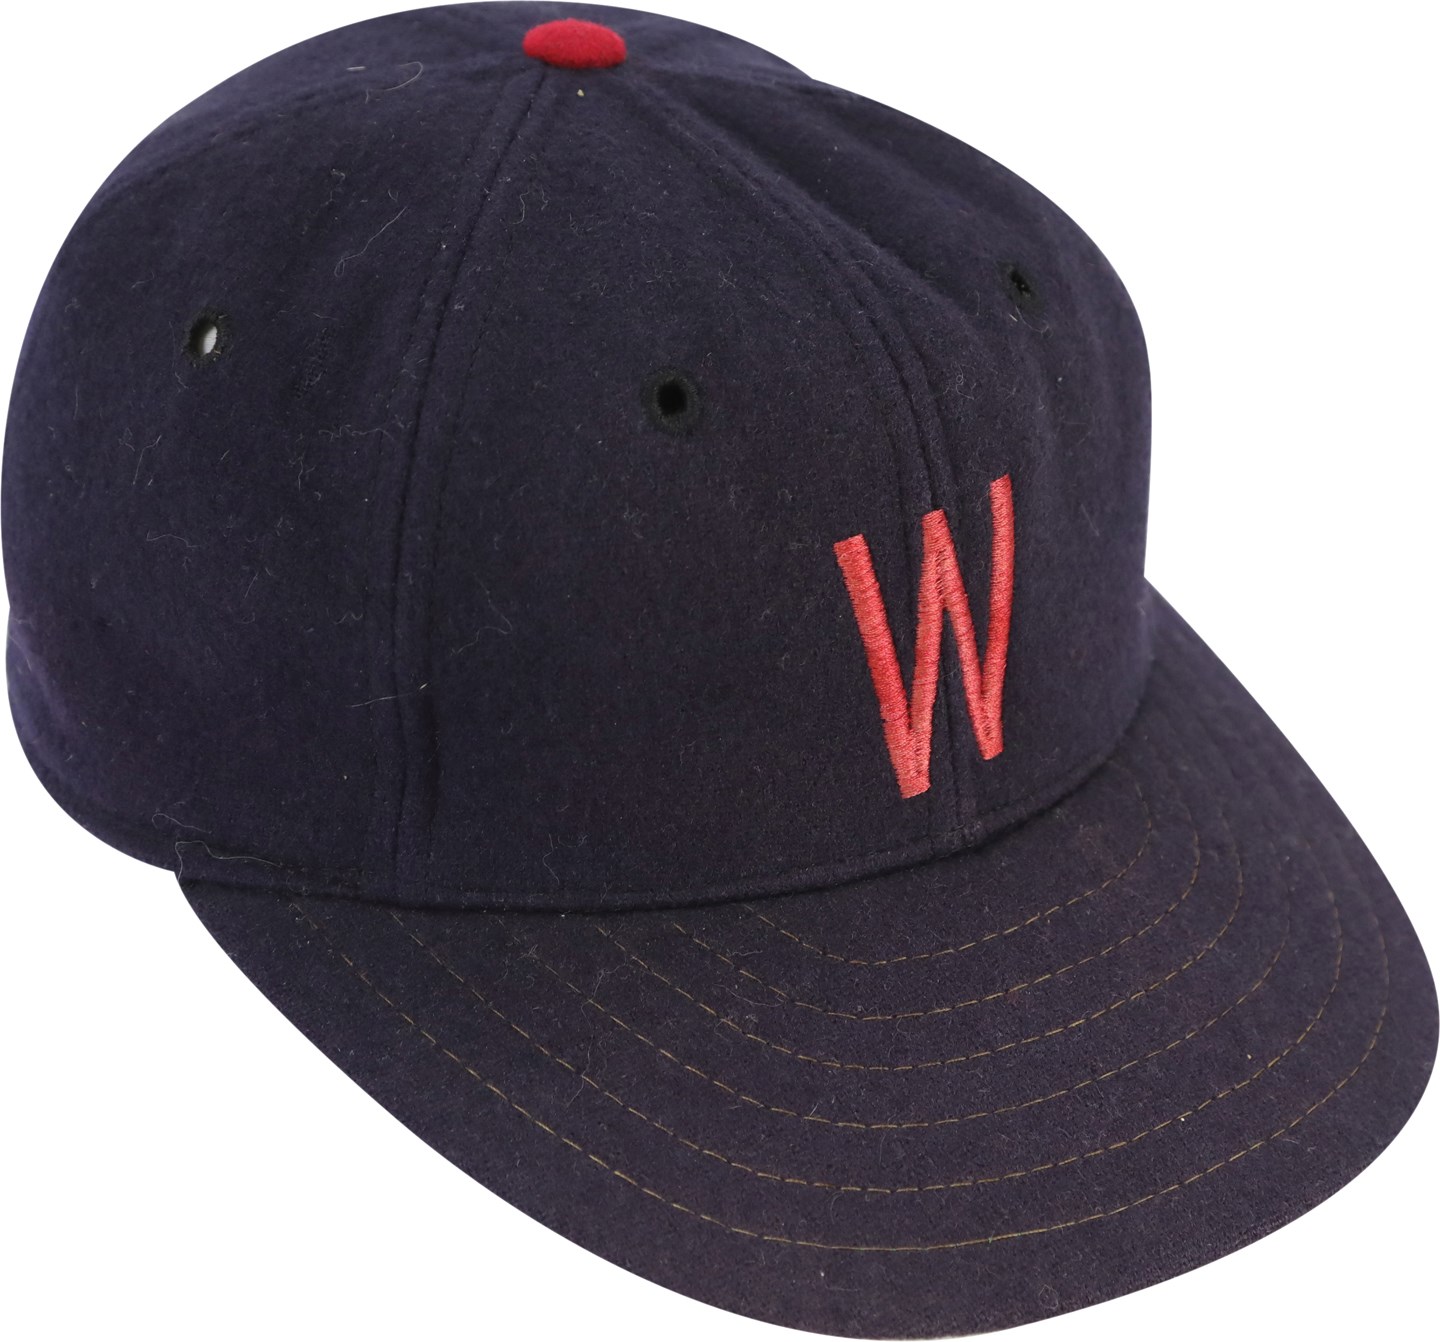 - Rare 1950s Washington Senators Game Used Cap